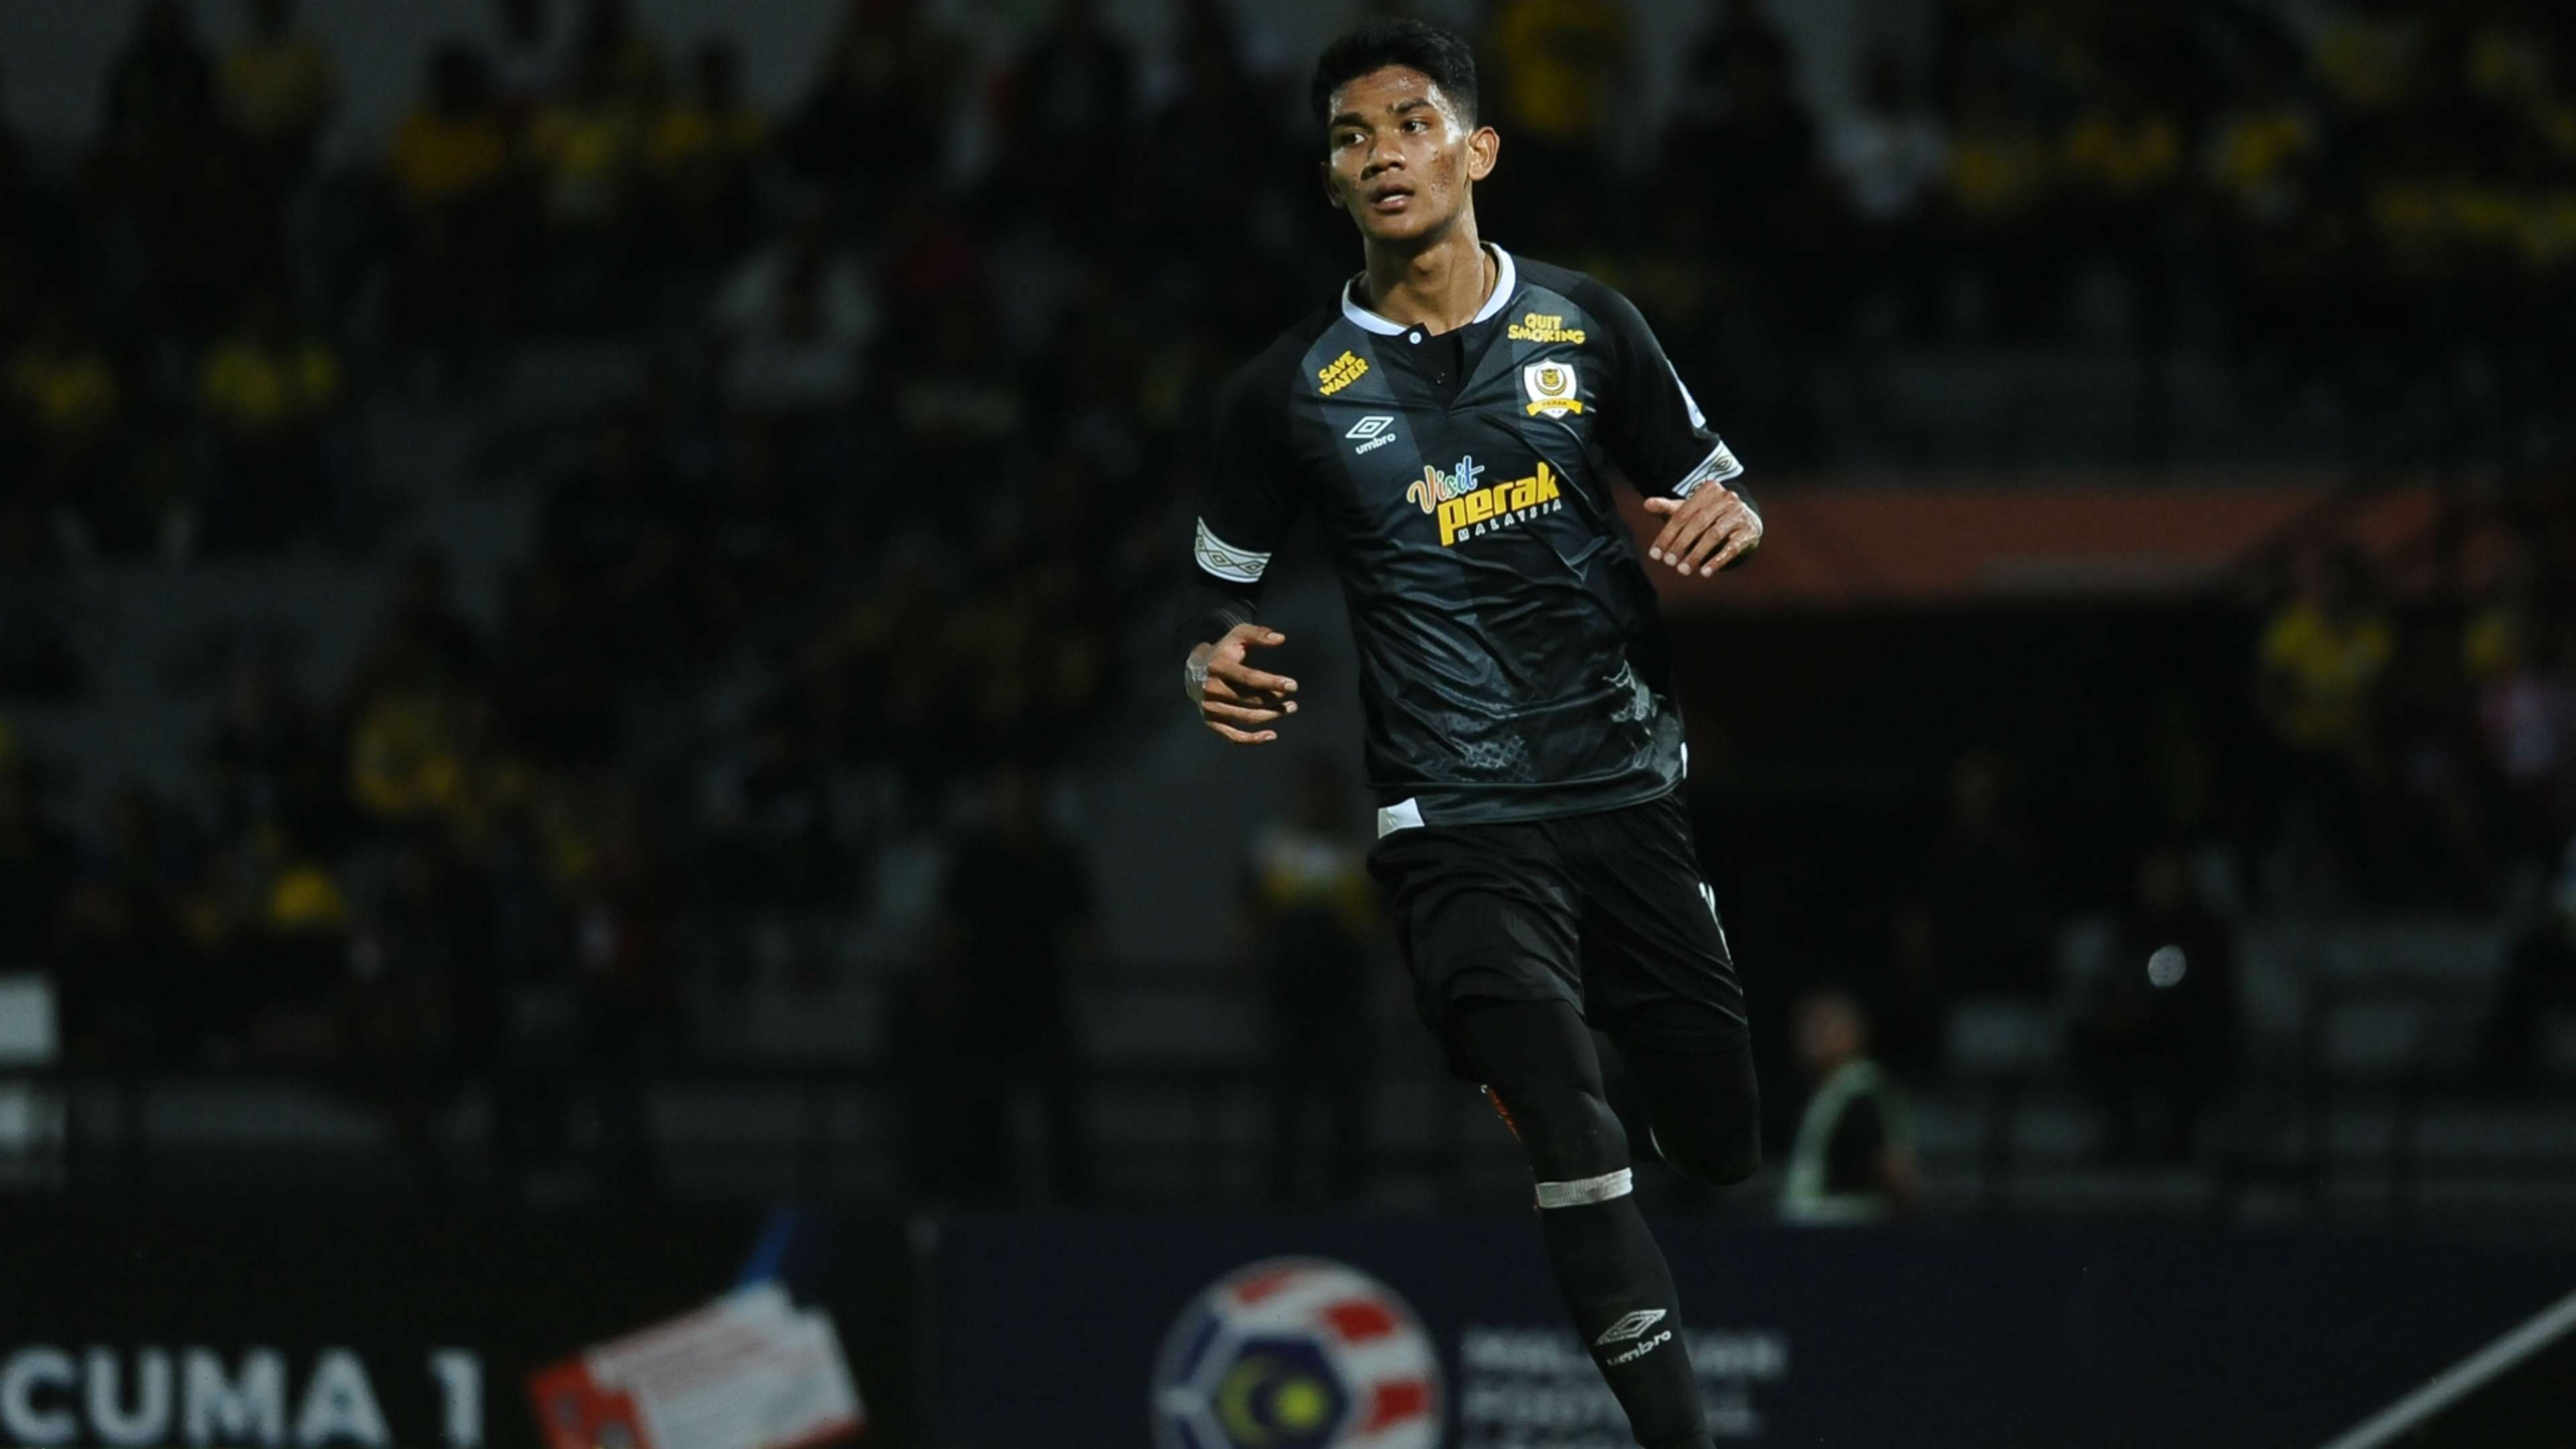 Shahrel Fikri, PJ City FC v Perak, Malaysia Super League, 14 Jun 2019